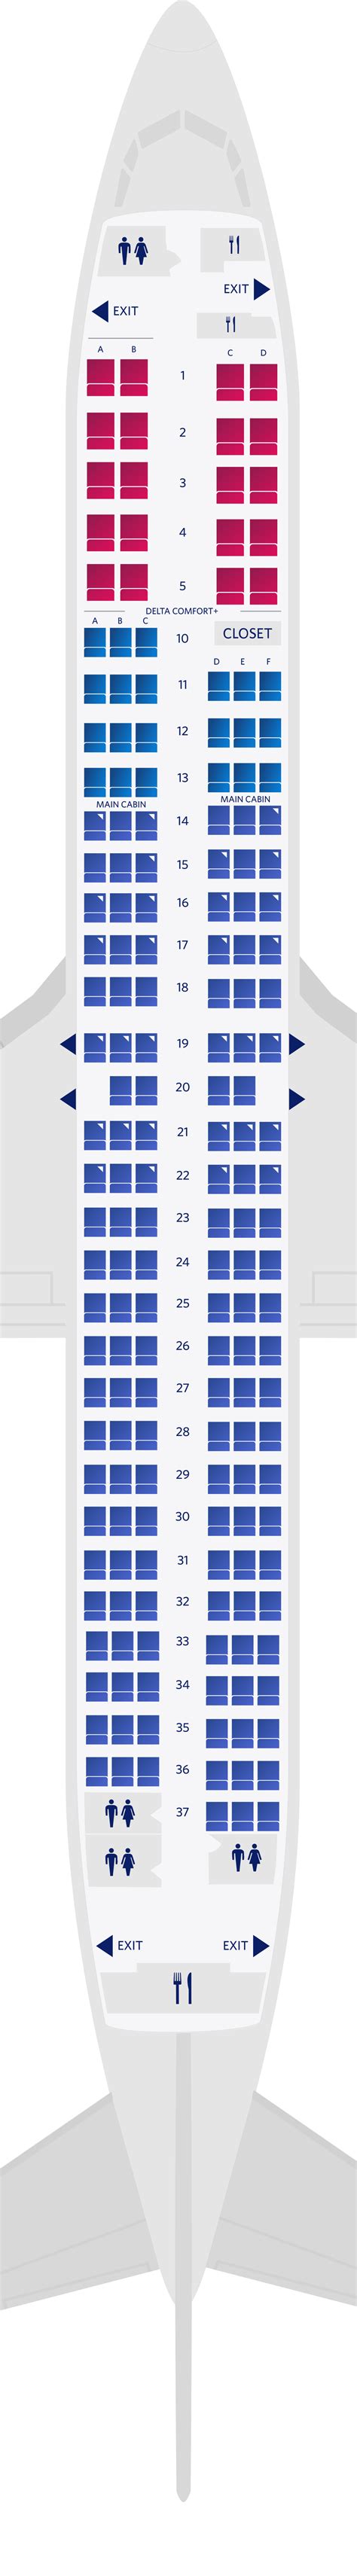 delta boeing 737 900er seating chart